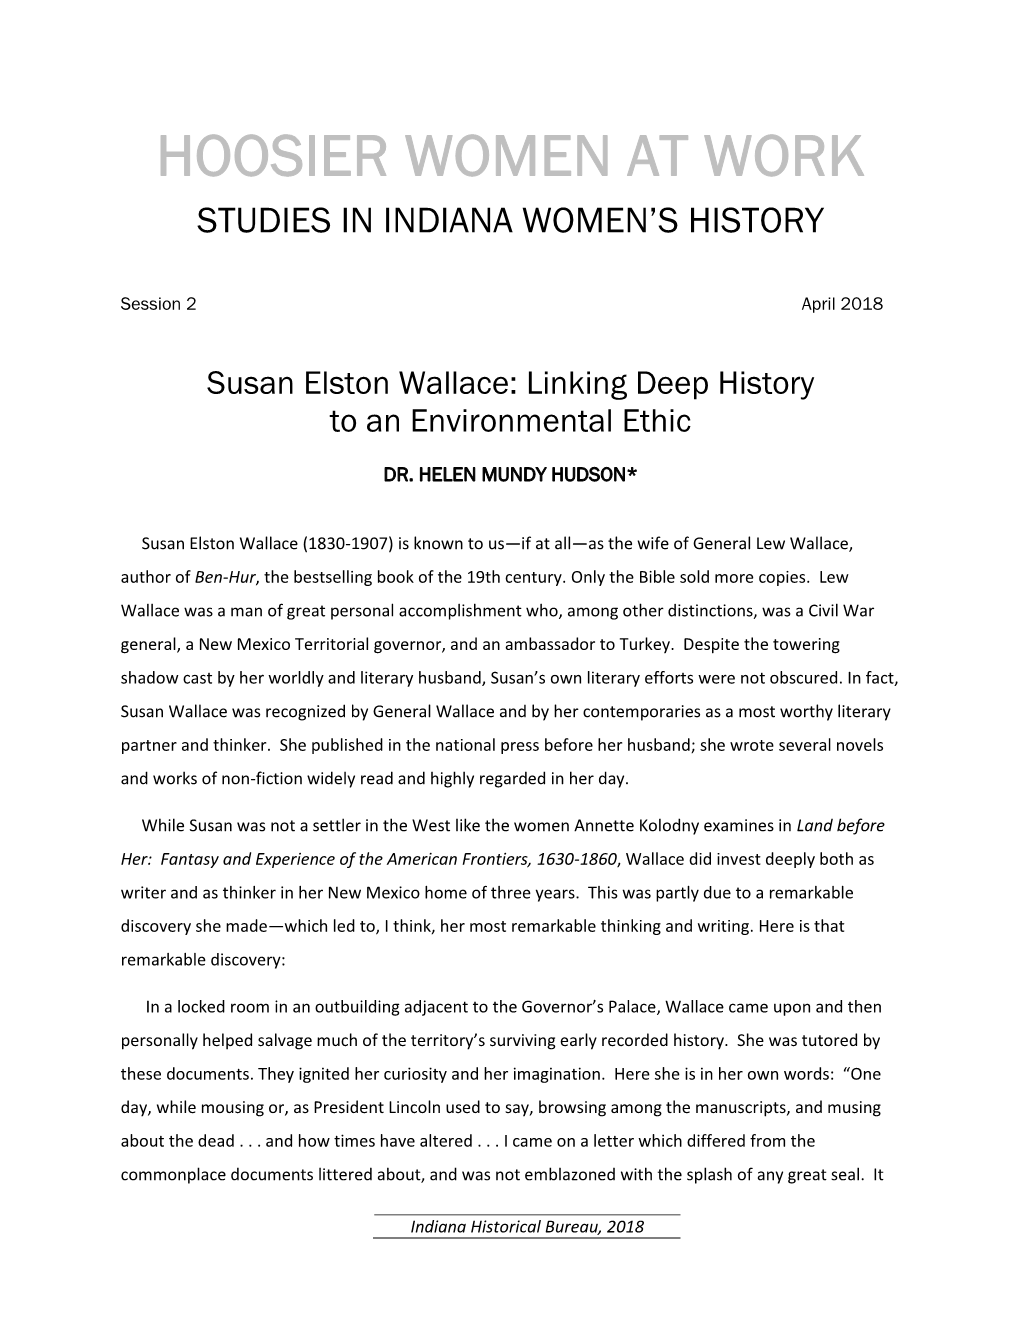 Susan Elston Wallace: Linking Deep History to an Environmental Ethic